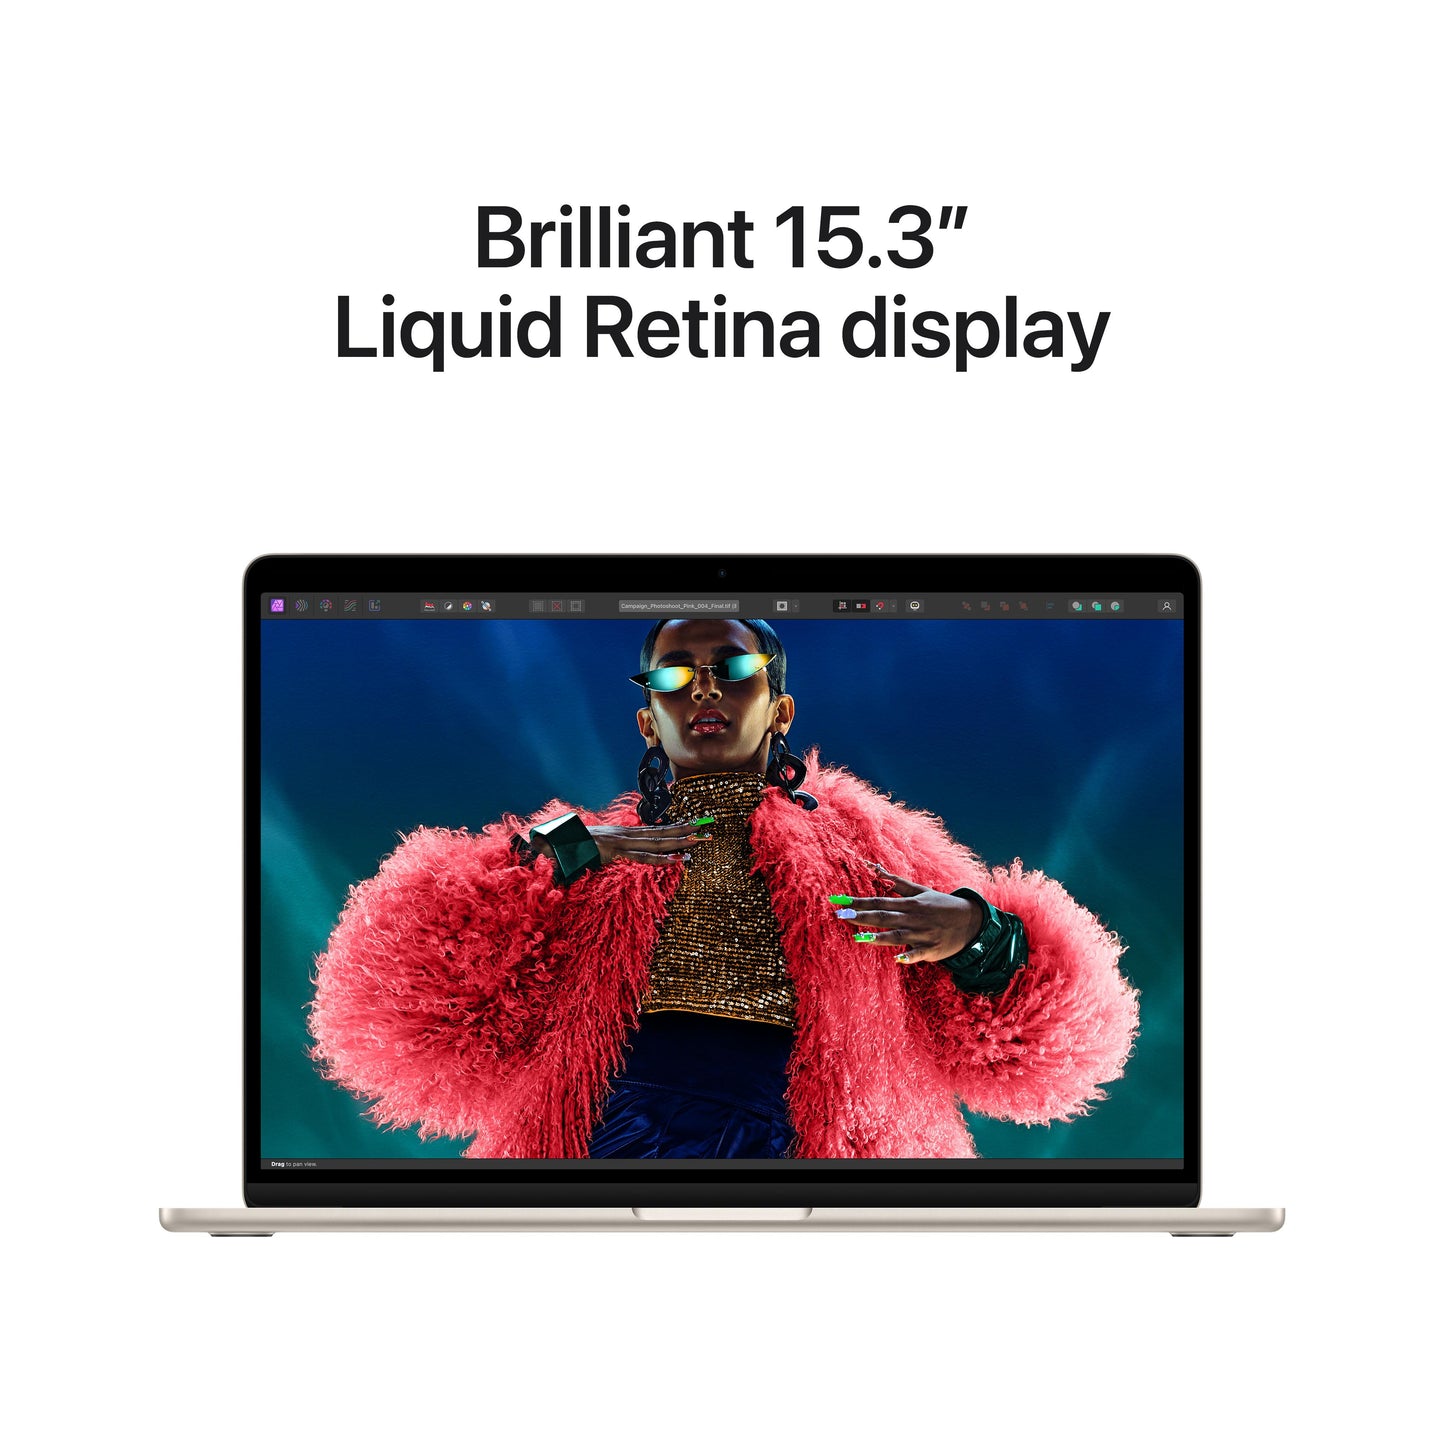 15-inch MacBook Air: Apple M3 chip with 8‑core CPU and 10‑core GPU, 256GB SSD - Starlight